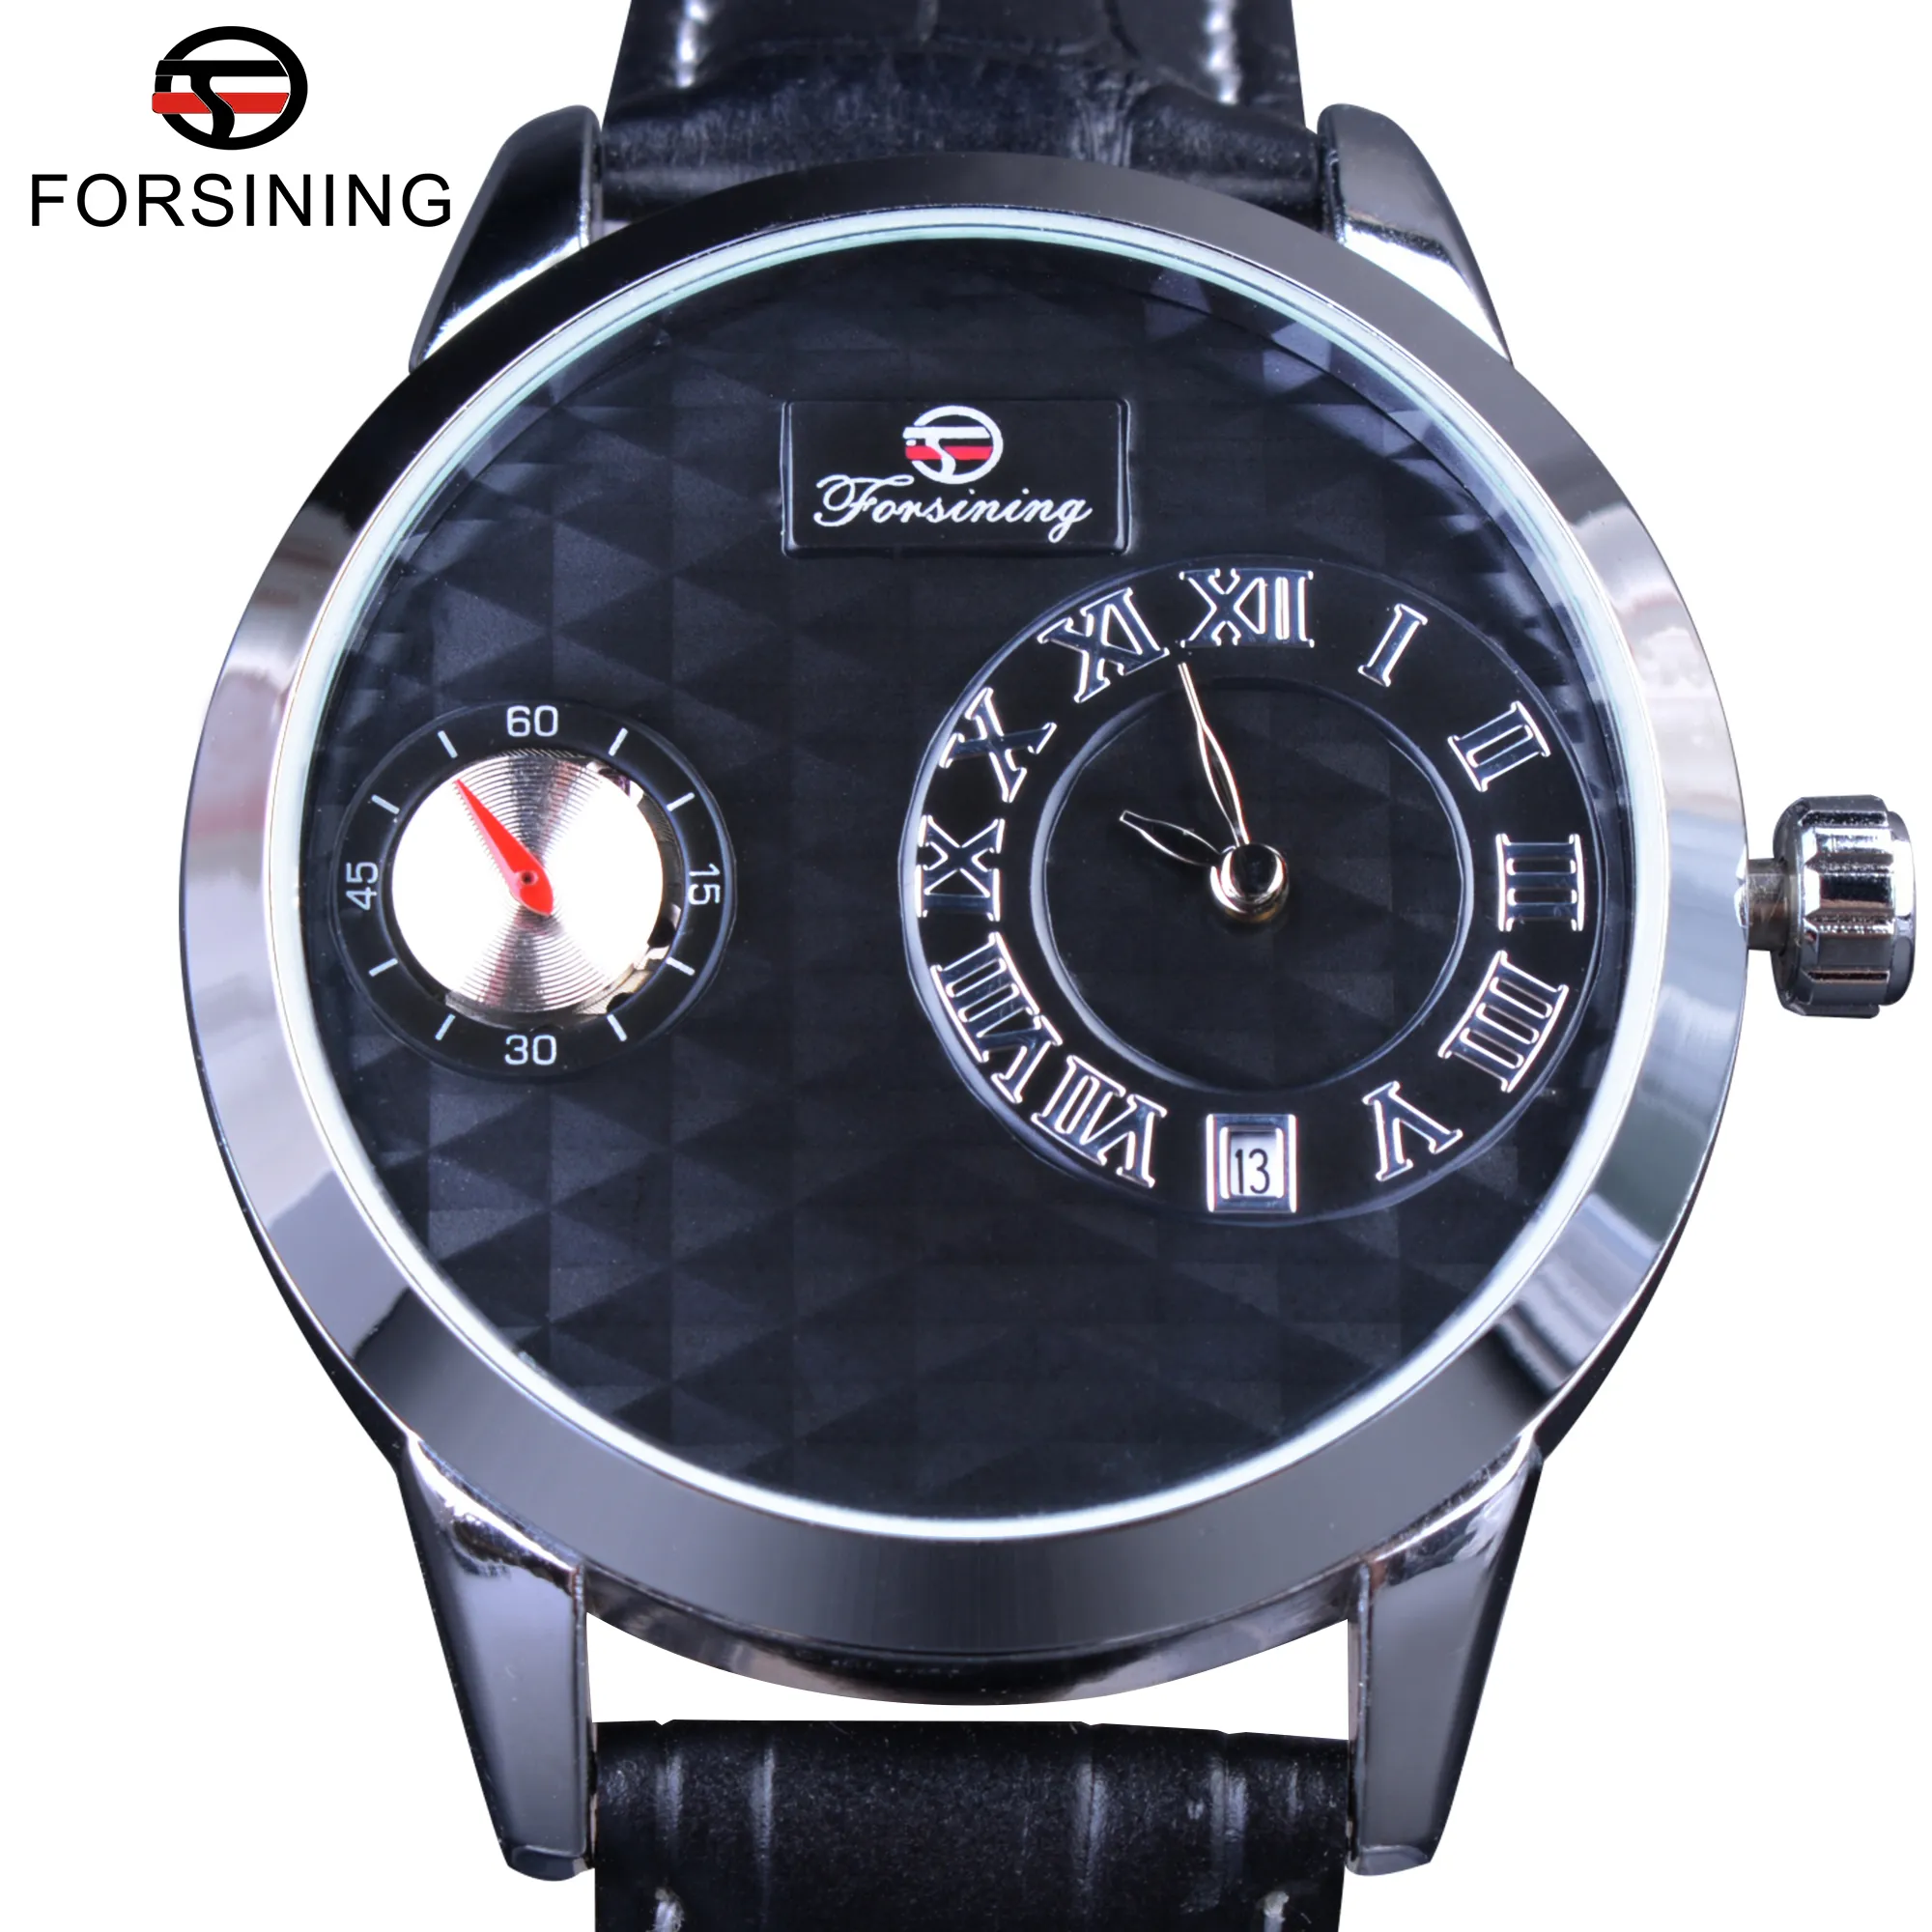 Forsining pequeno mostrador relógio de segunda mão obscuro desig relógios masculinos marca superior luxo relógio automático moda casual me2639